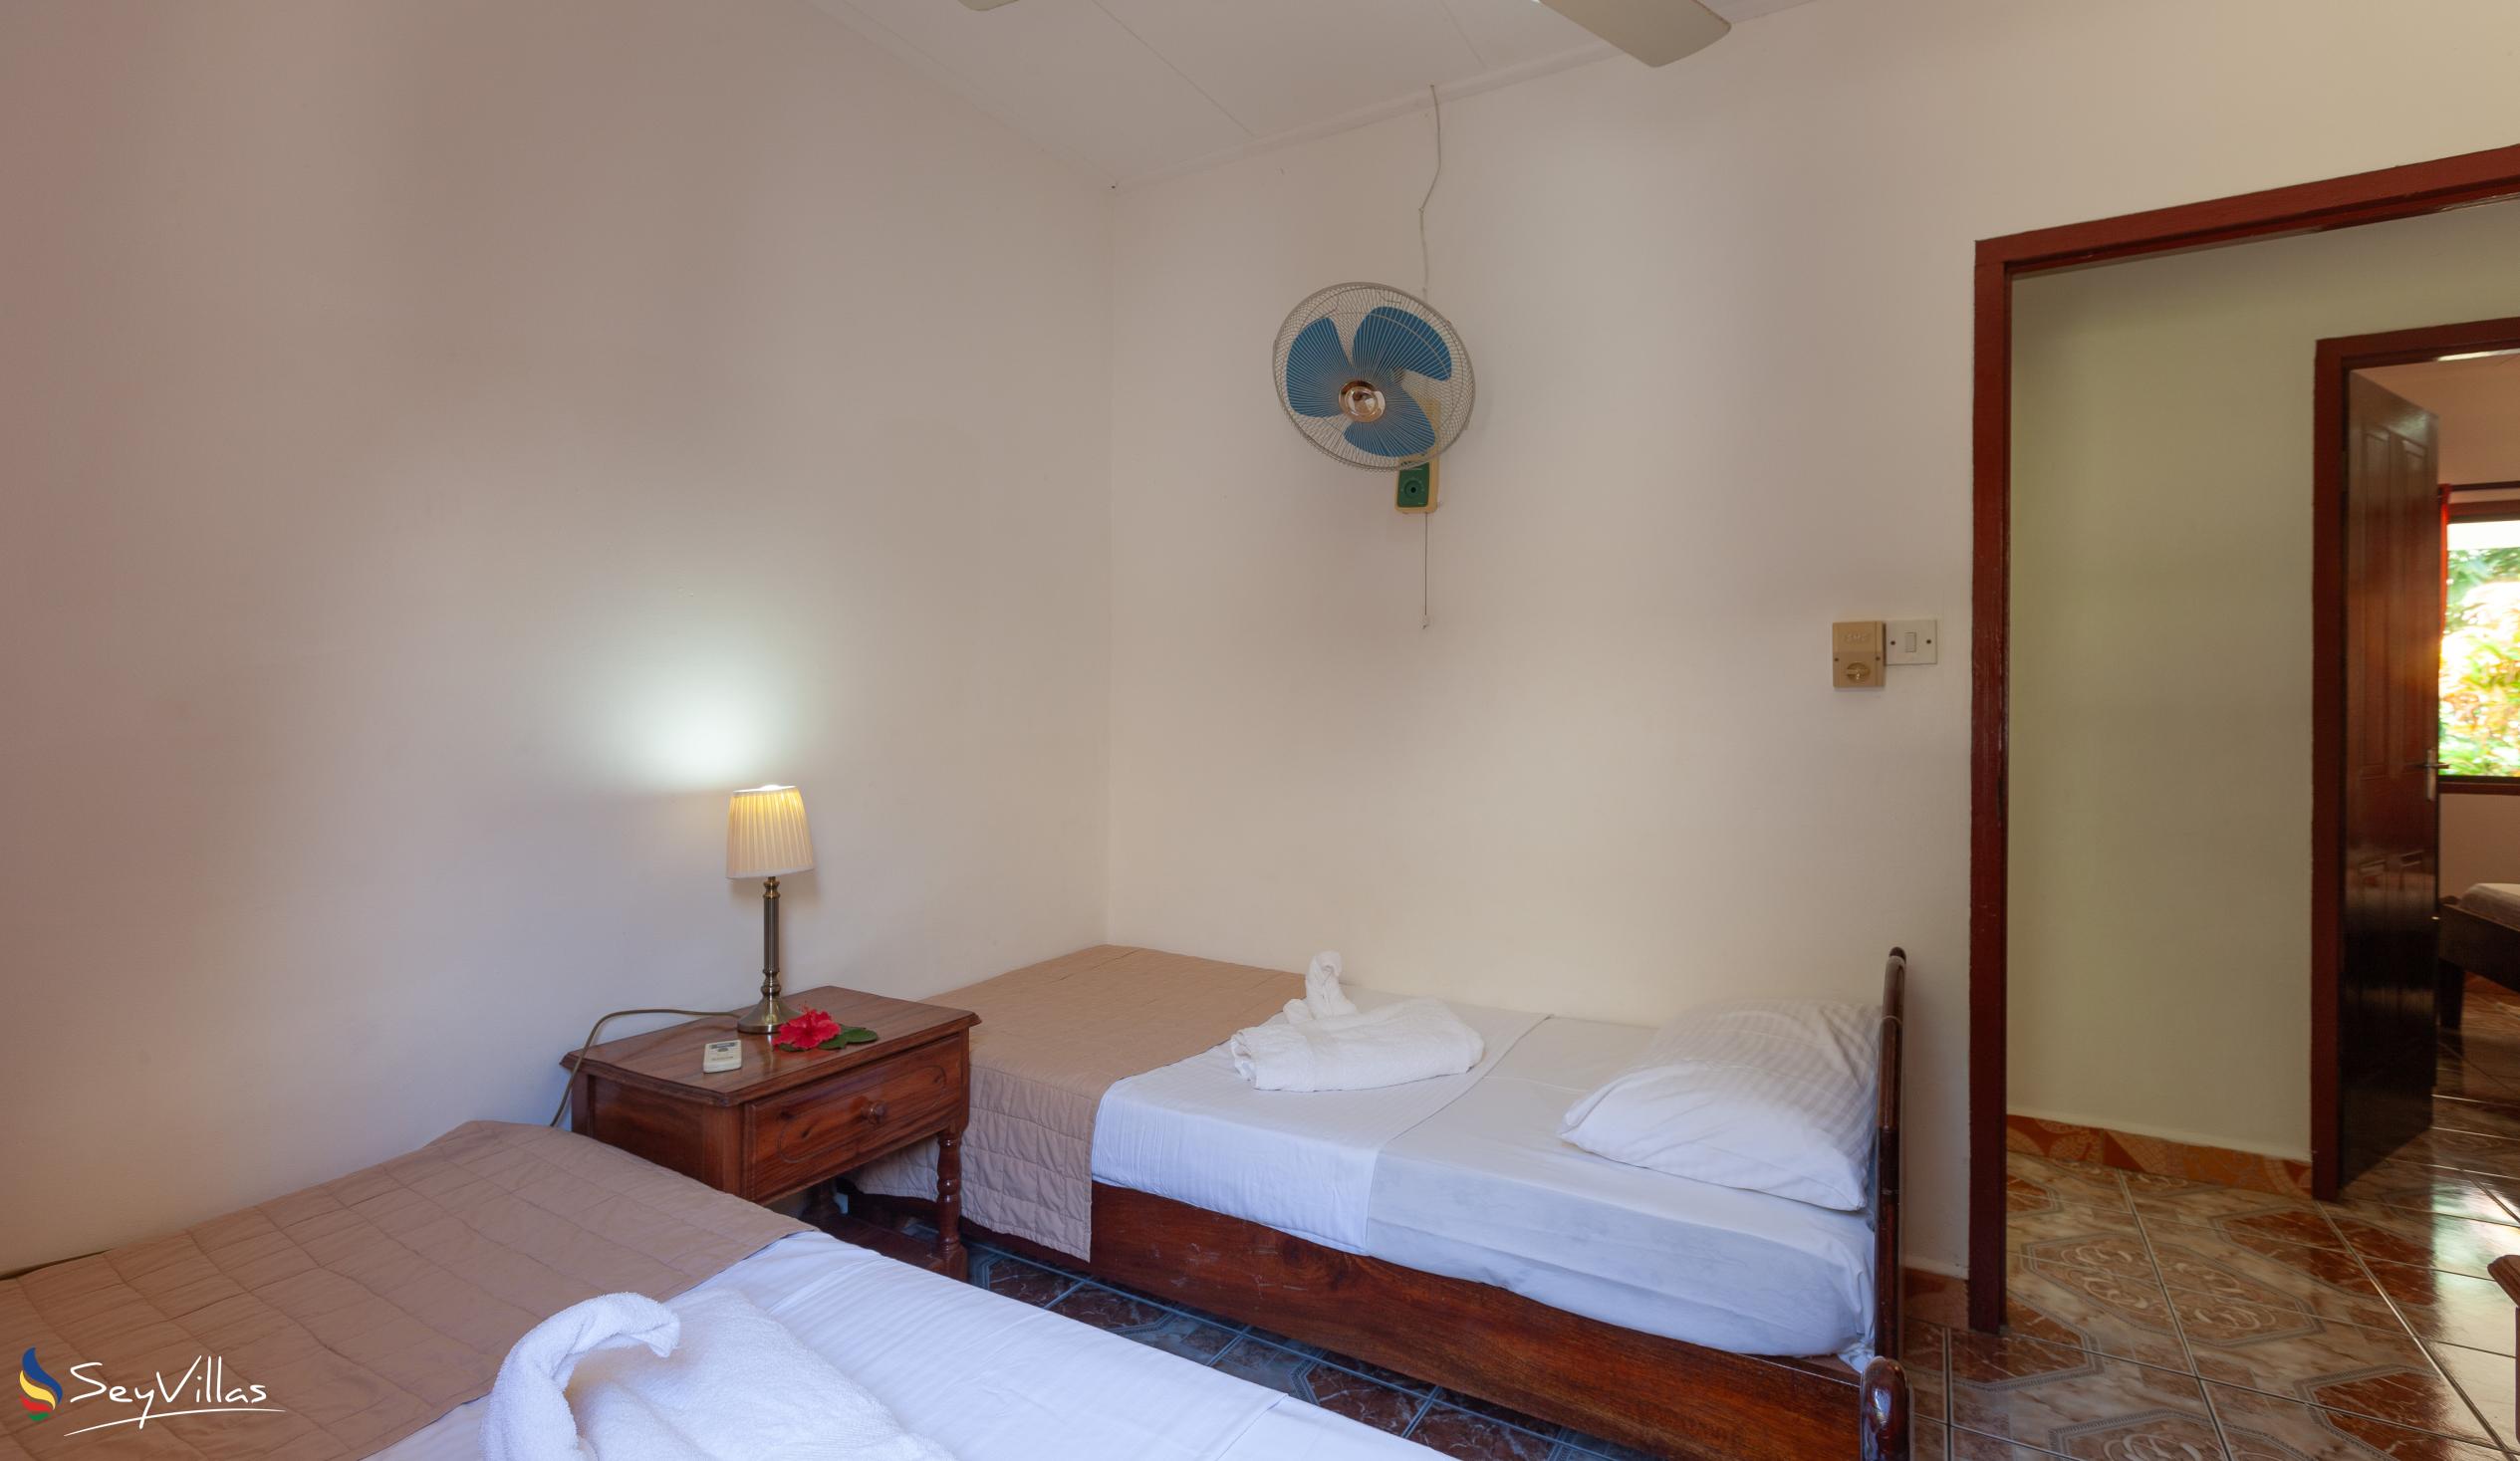 Foto 51: Dan Kazou - Appartement 2 chambres - La Digue (Seychelles)